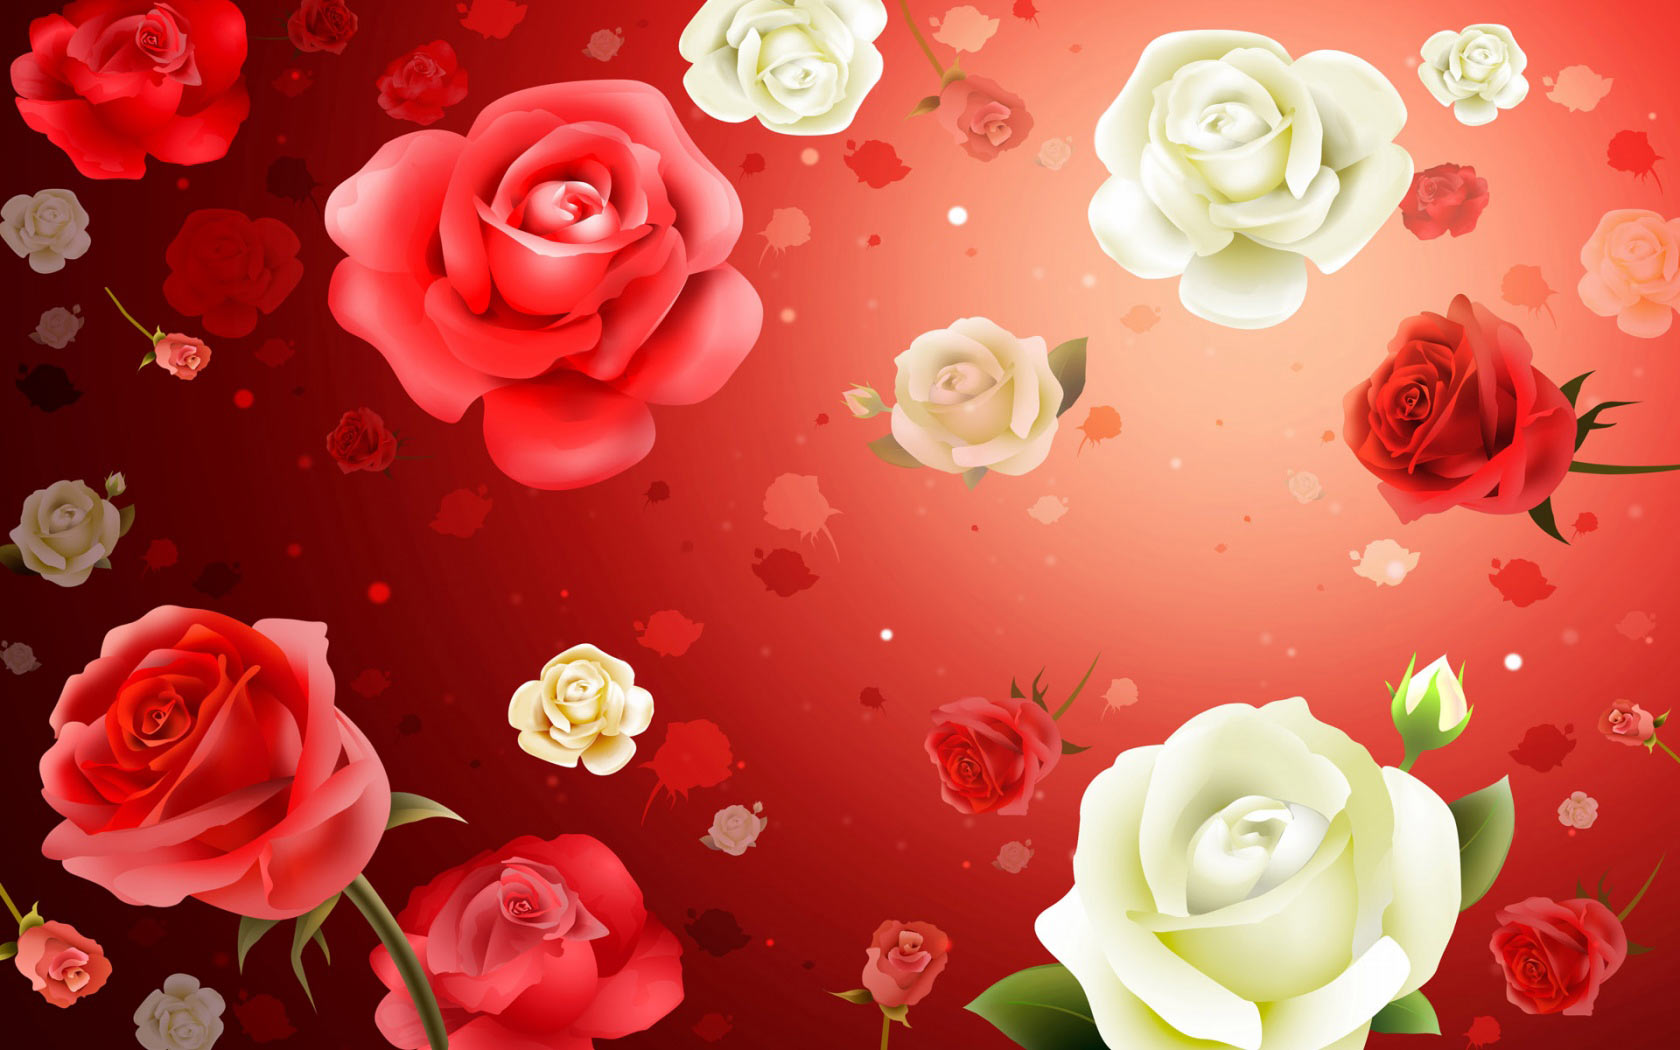 Get Roses Flowers Background Windows Desktop Wallpaper And